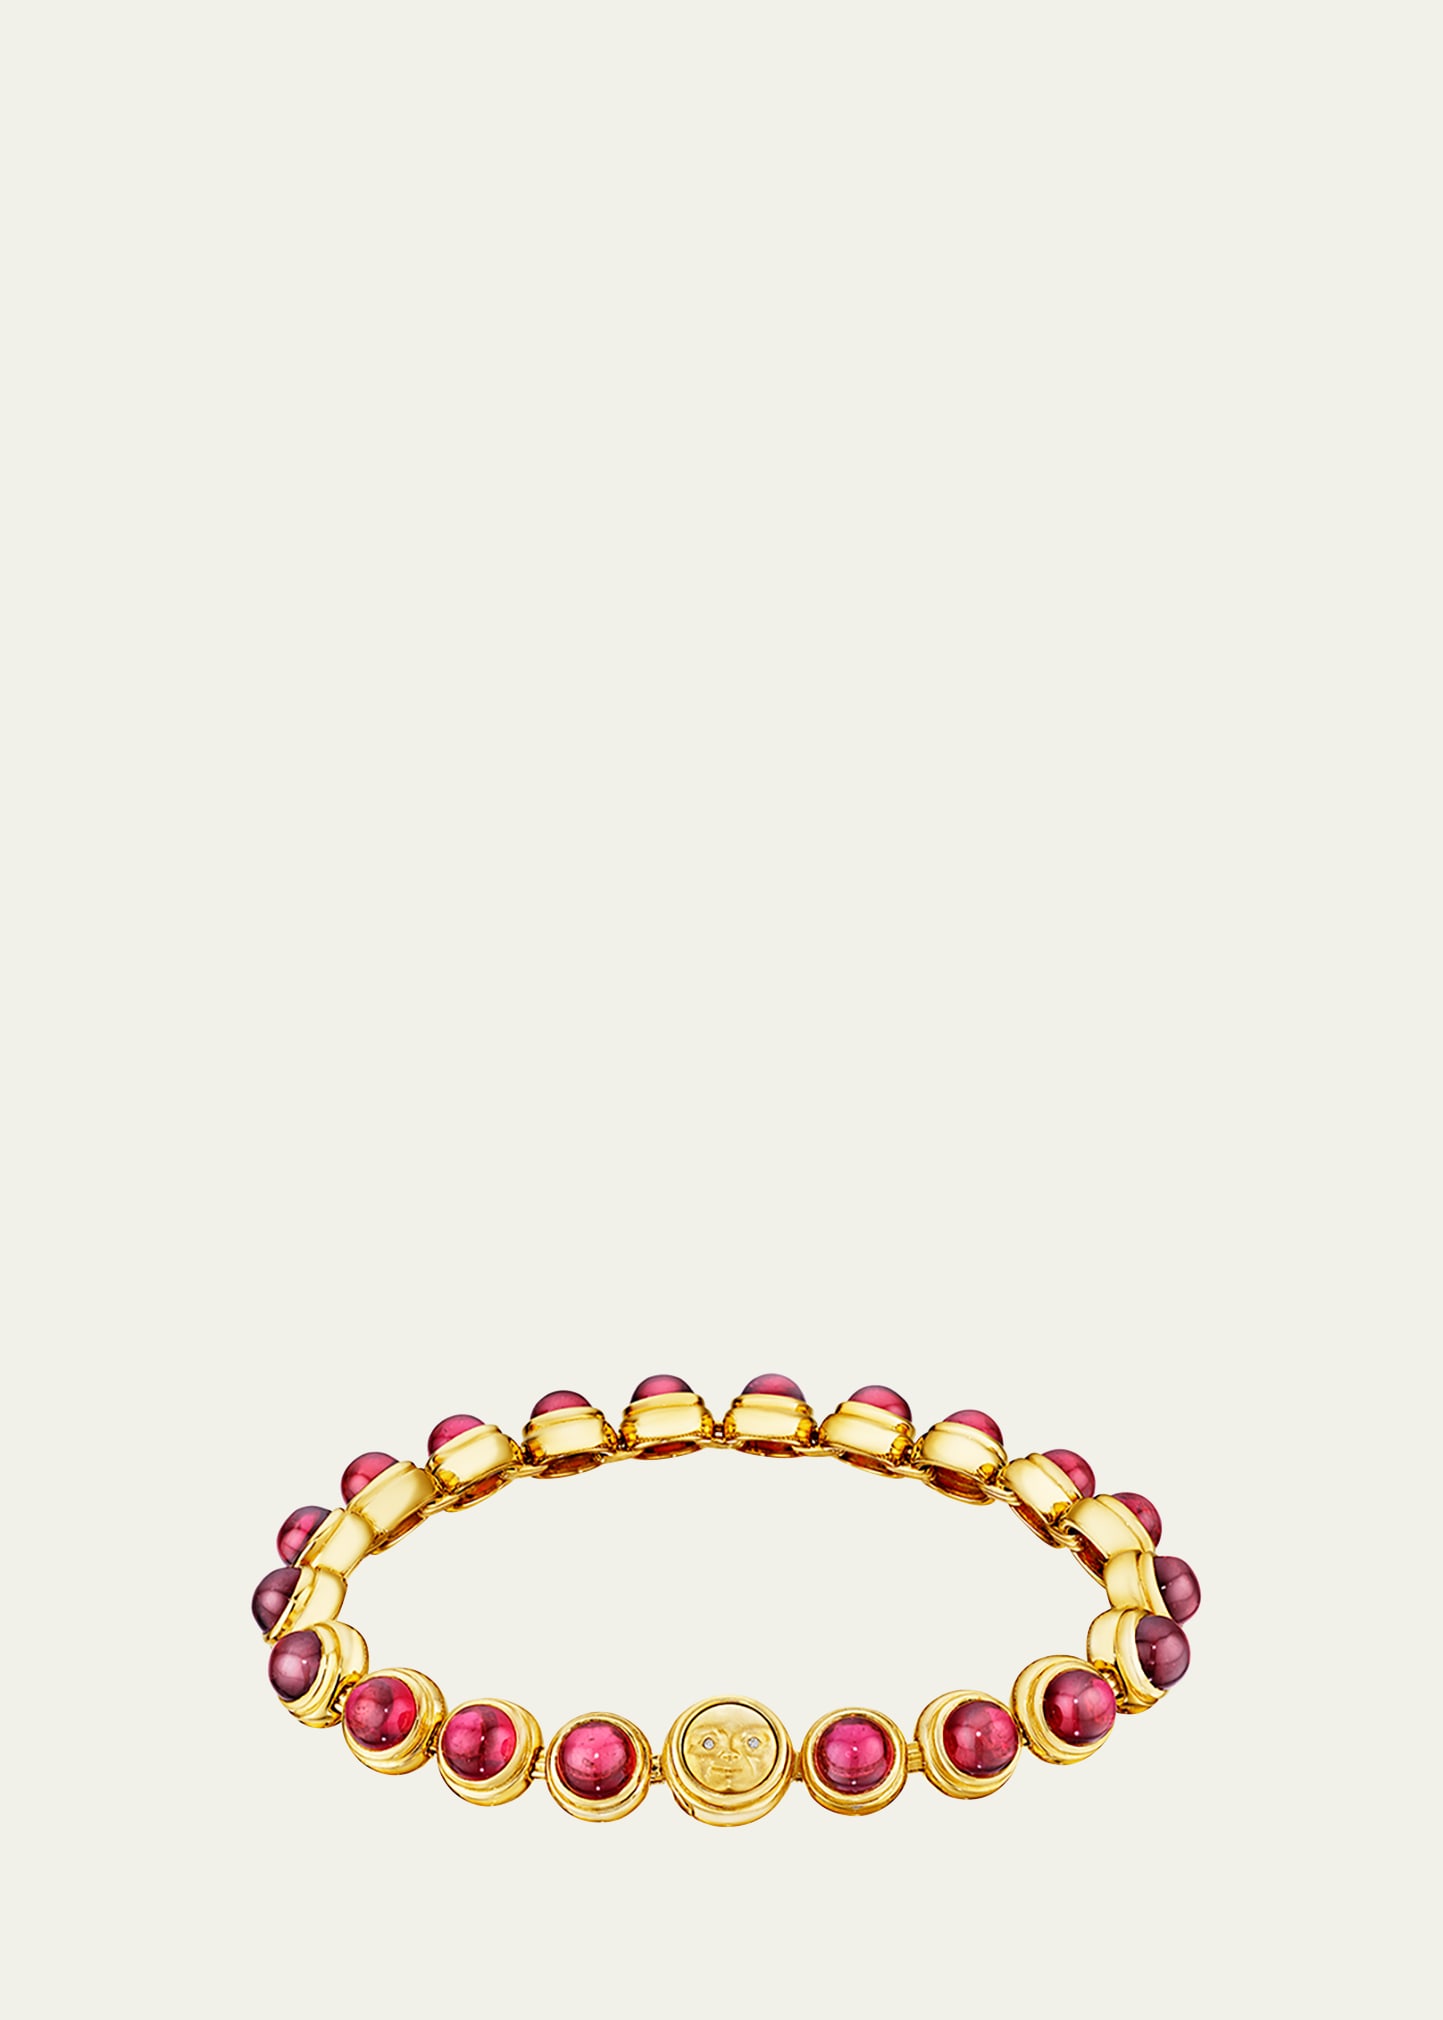 Moon Chain Bracelet in 18K Gold and Garnet